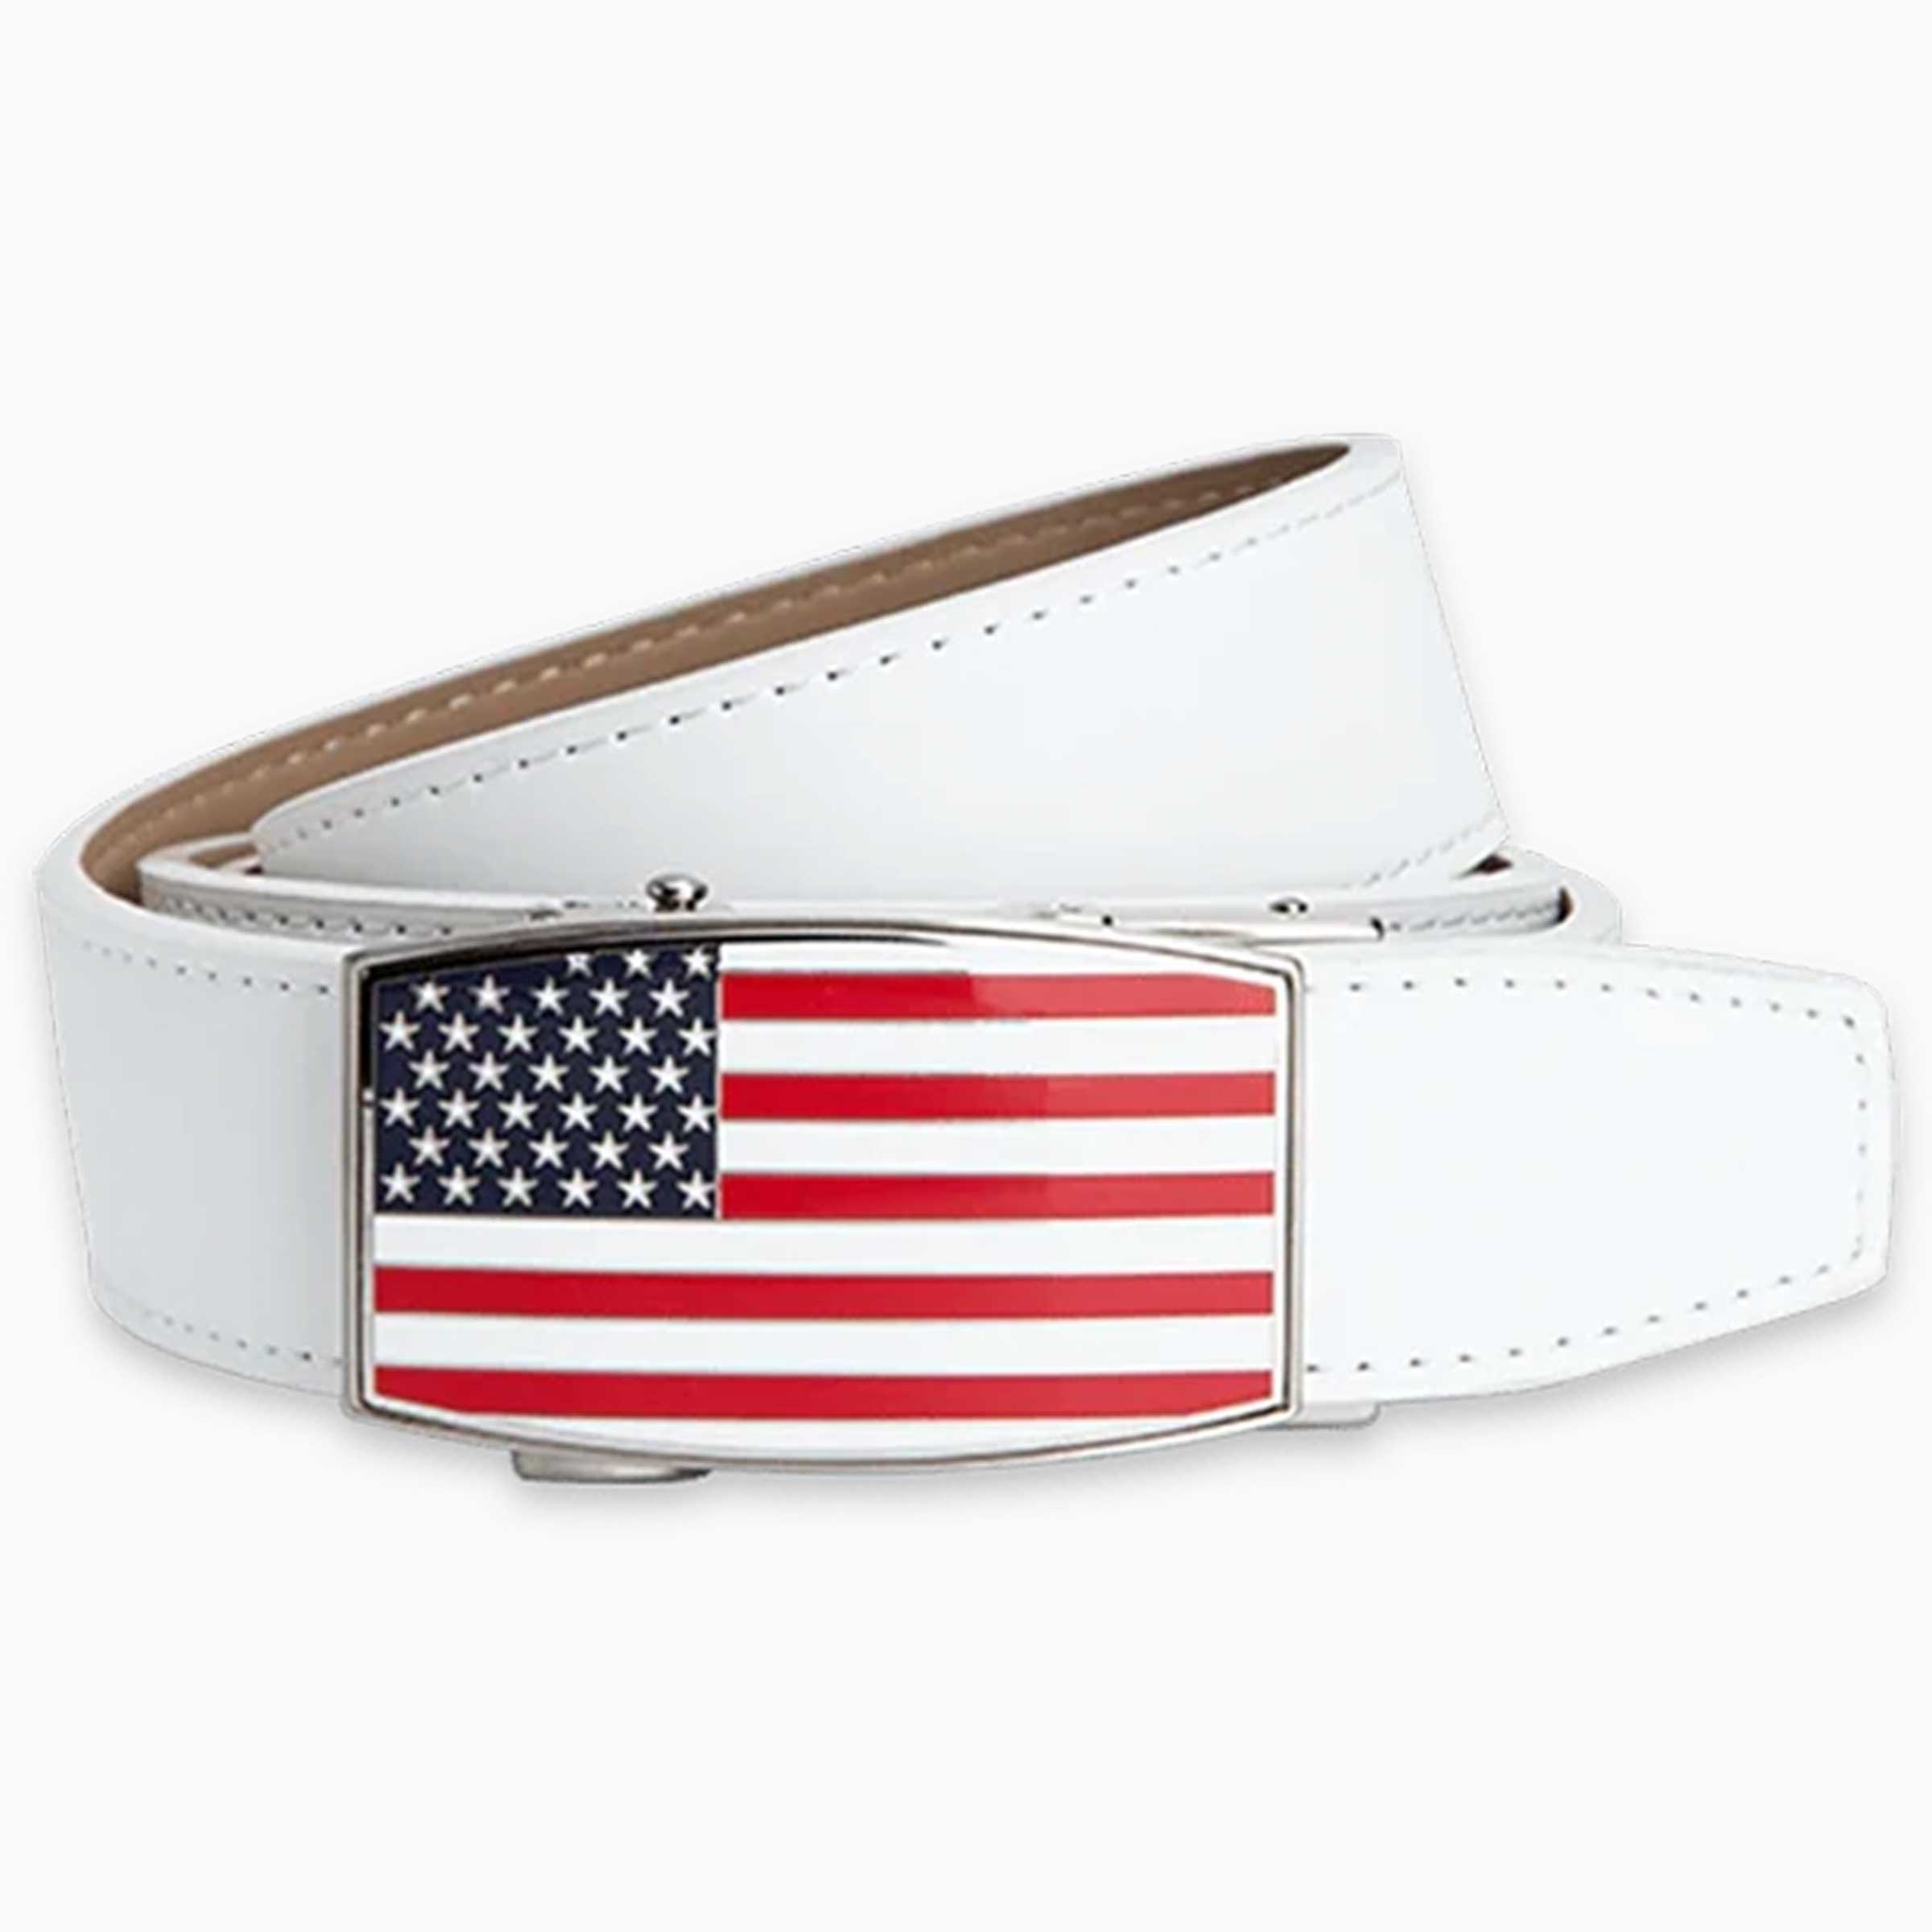 USA Flag Aston White Golf Belt 1.38" [35mm]